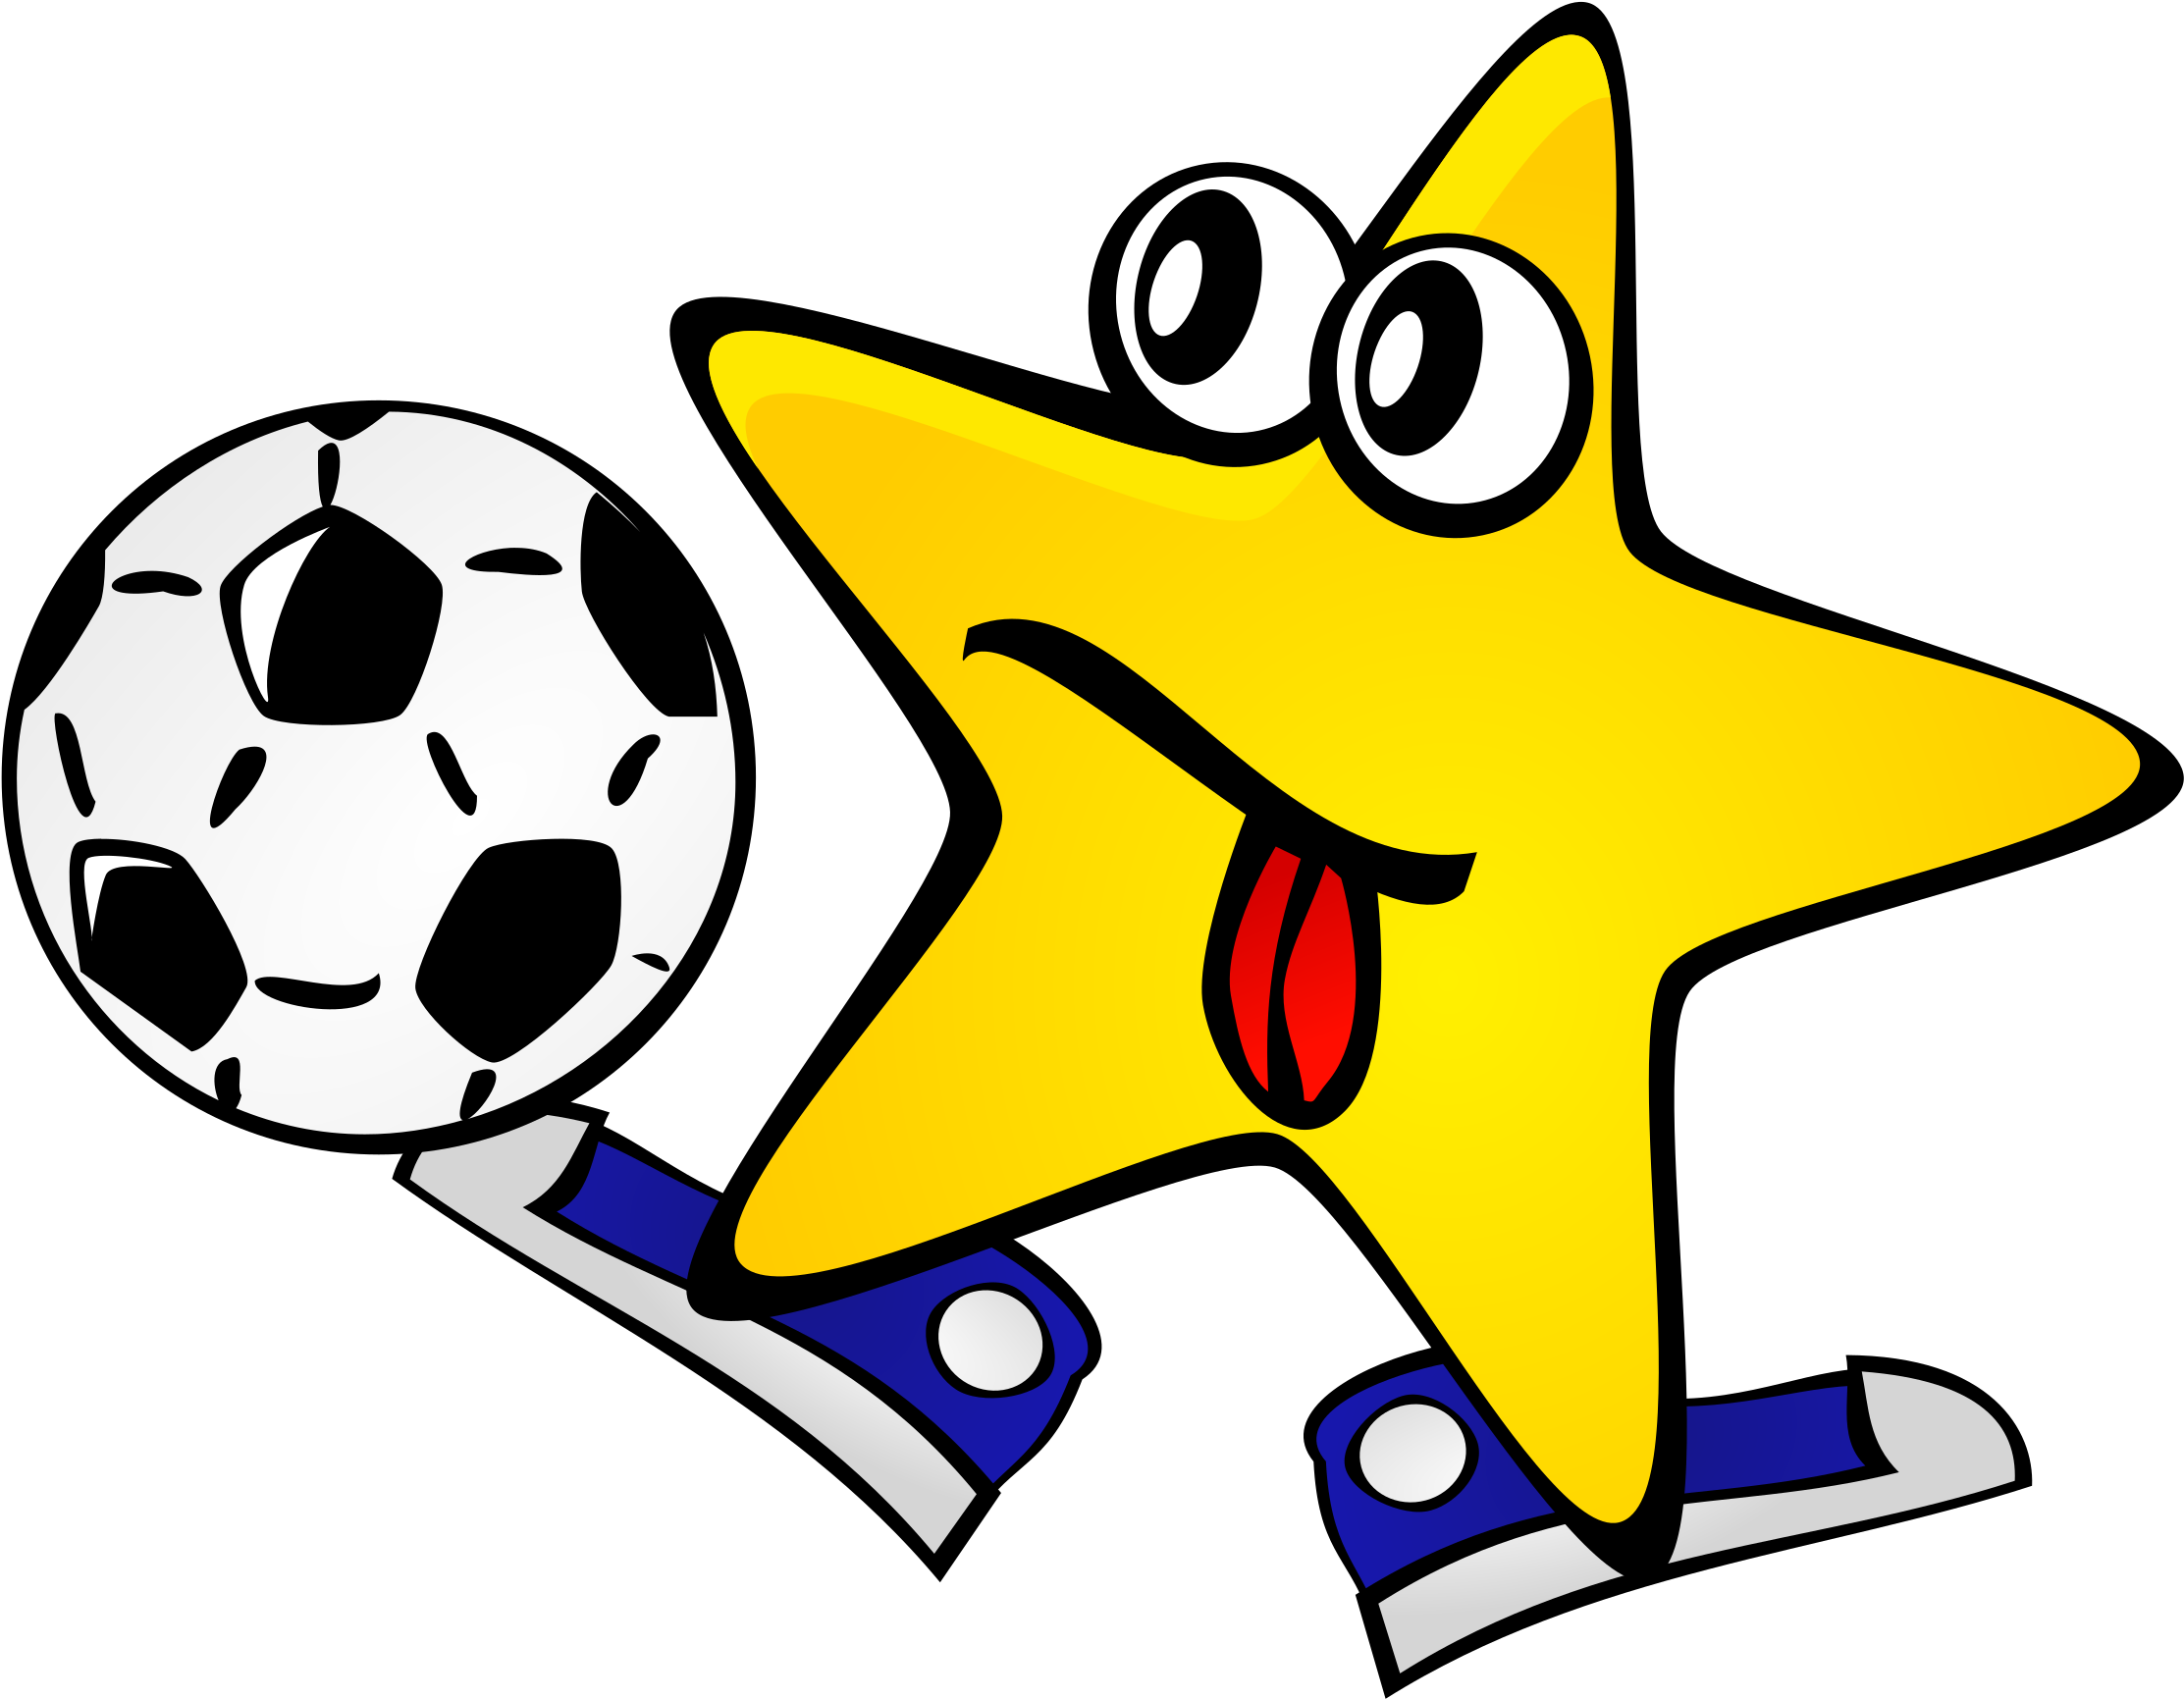 Big Image - Soccer Yellow Star 1 25 Magnet (2400x2400)